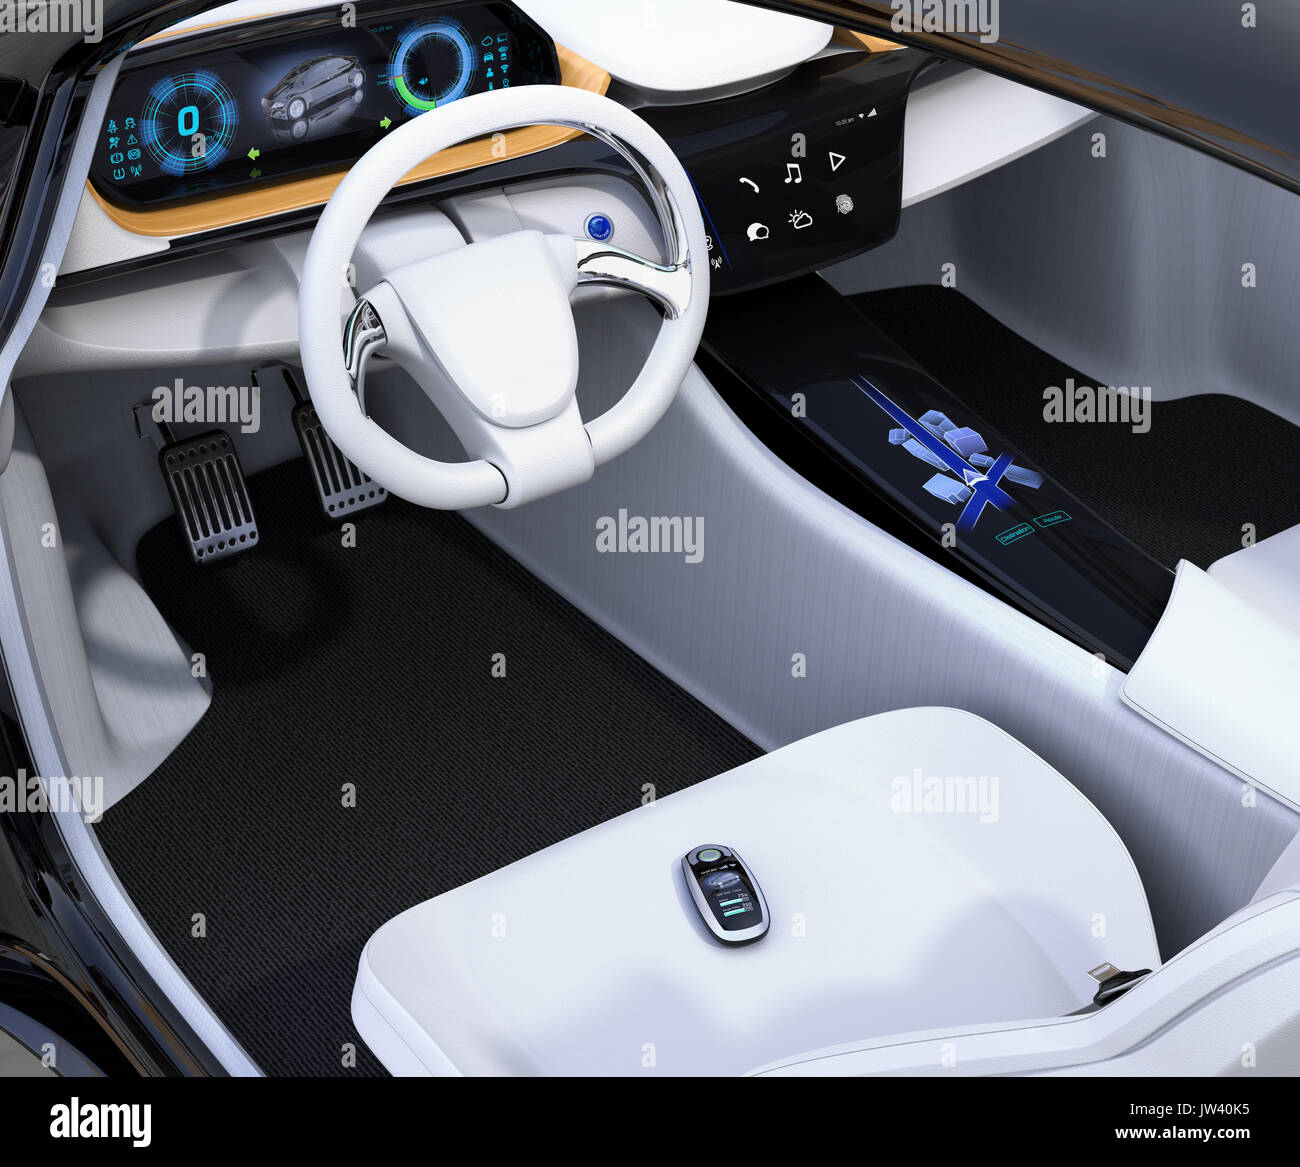 Smart car key on electric car's passenger seat. 3D rendering image. Stock Photo